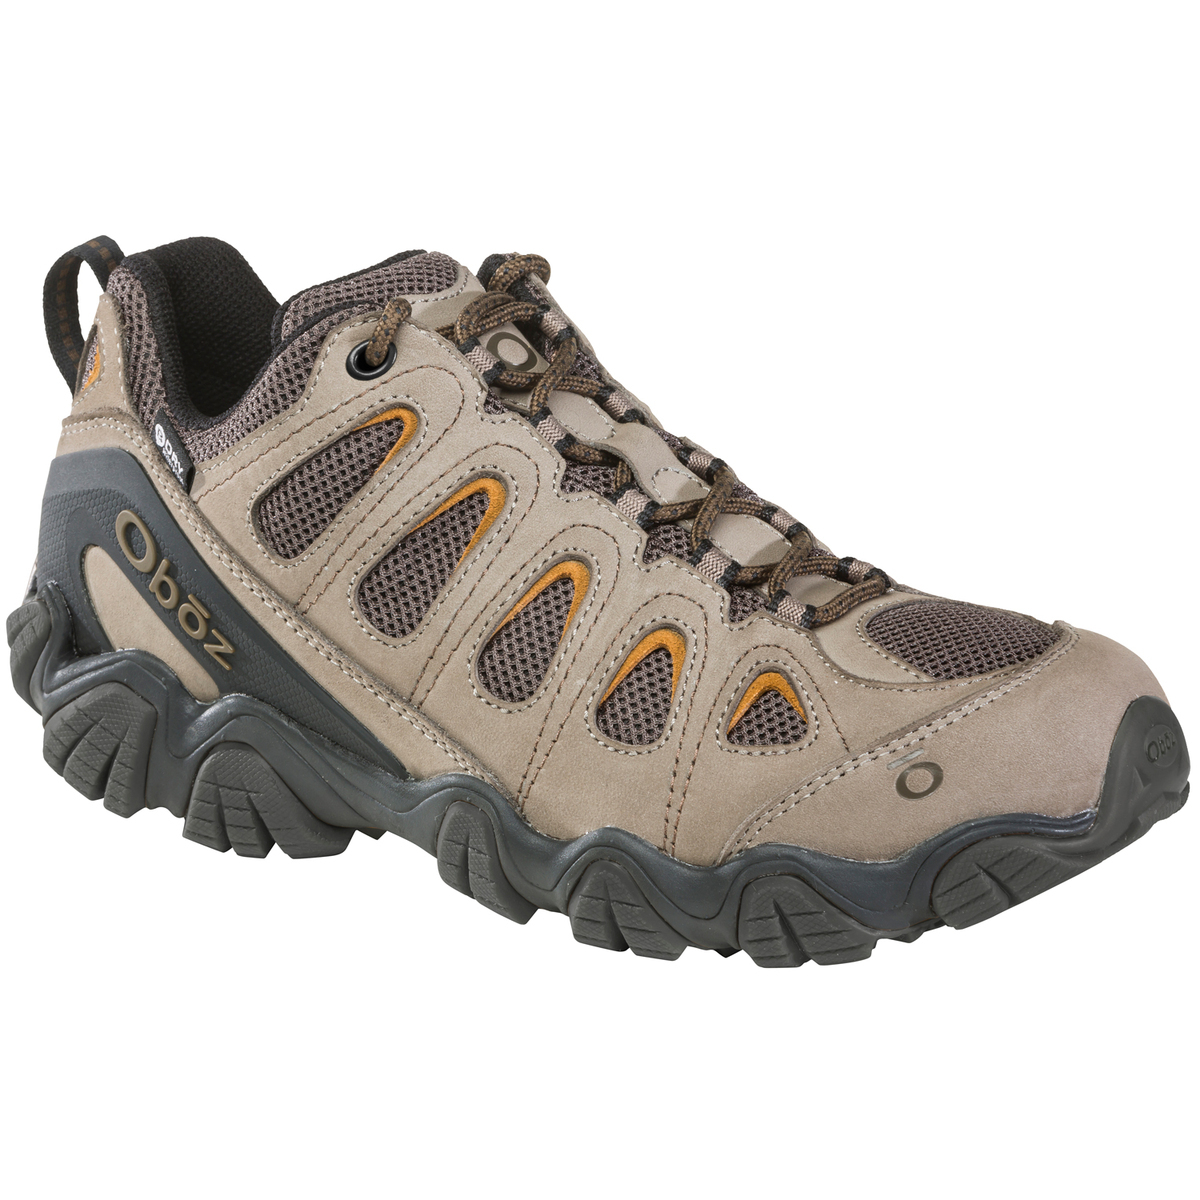 Oboz Men's Sawtooth II Waterproof Low Hiking Shoes | Sportsman's Warehouse